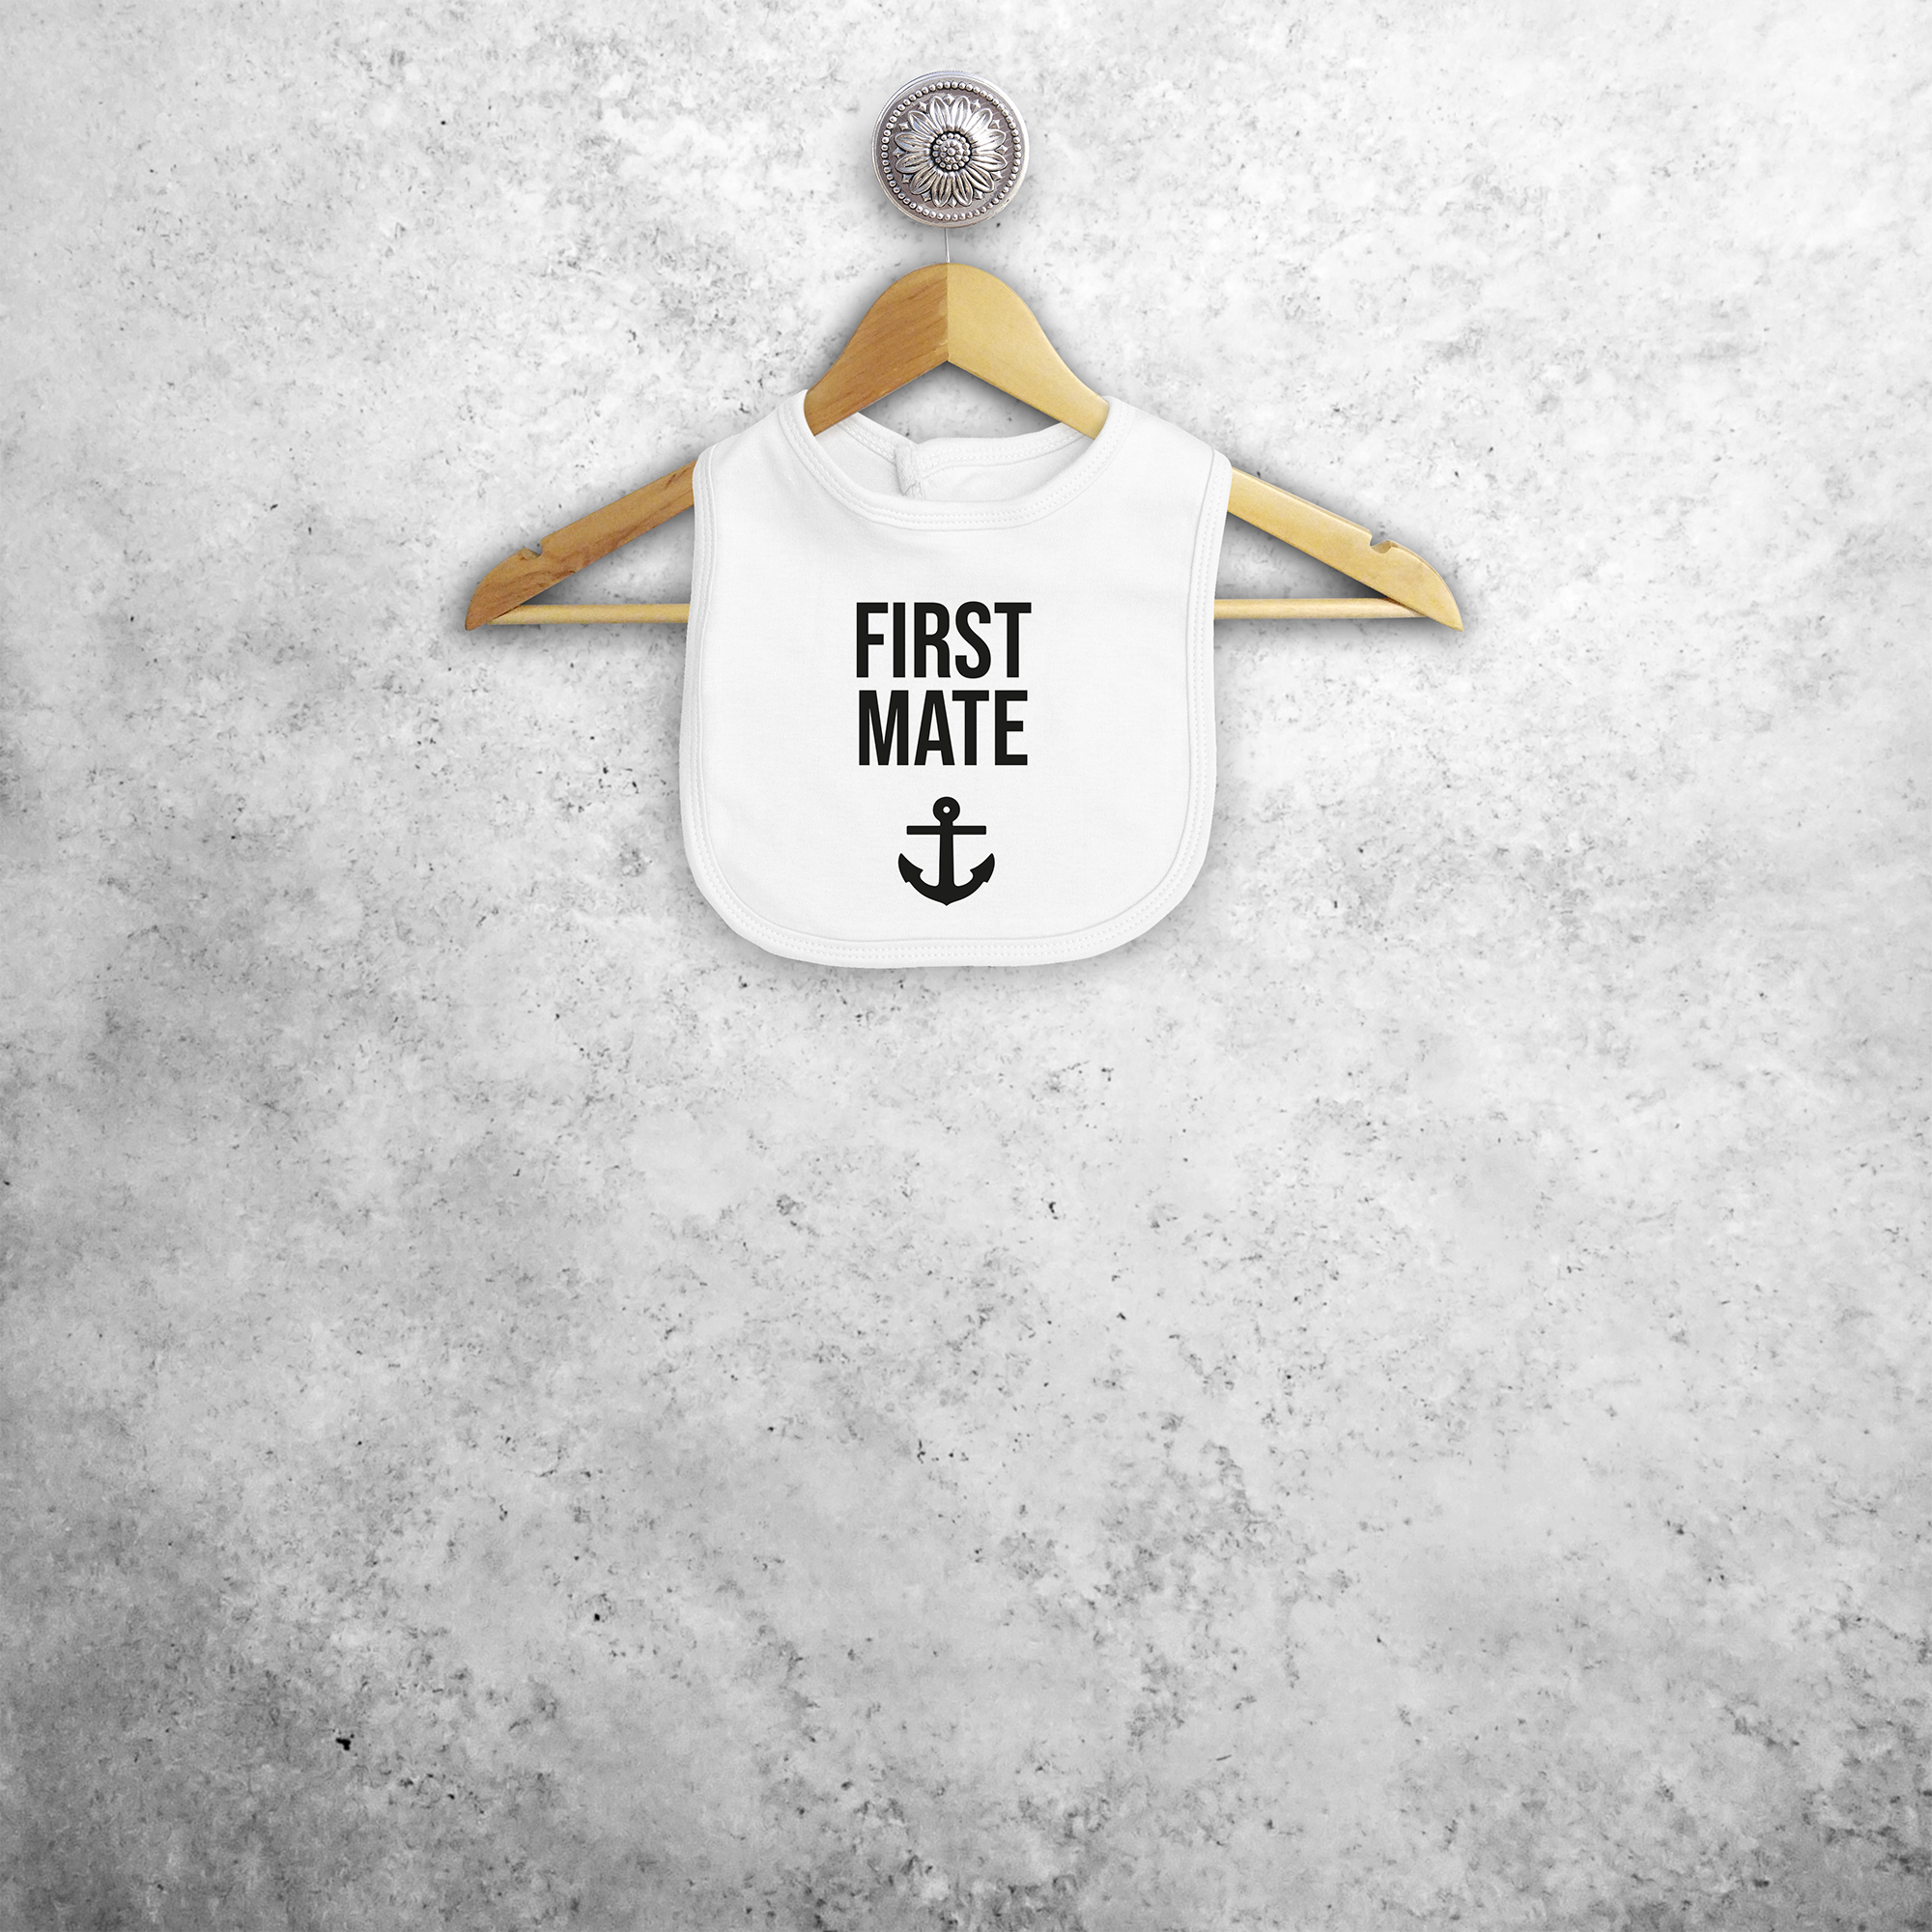 'First mate' baby bib